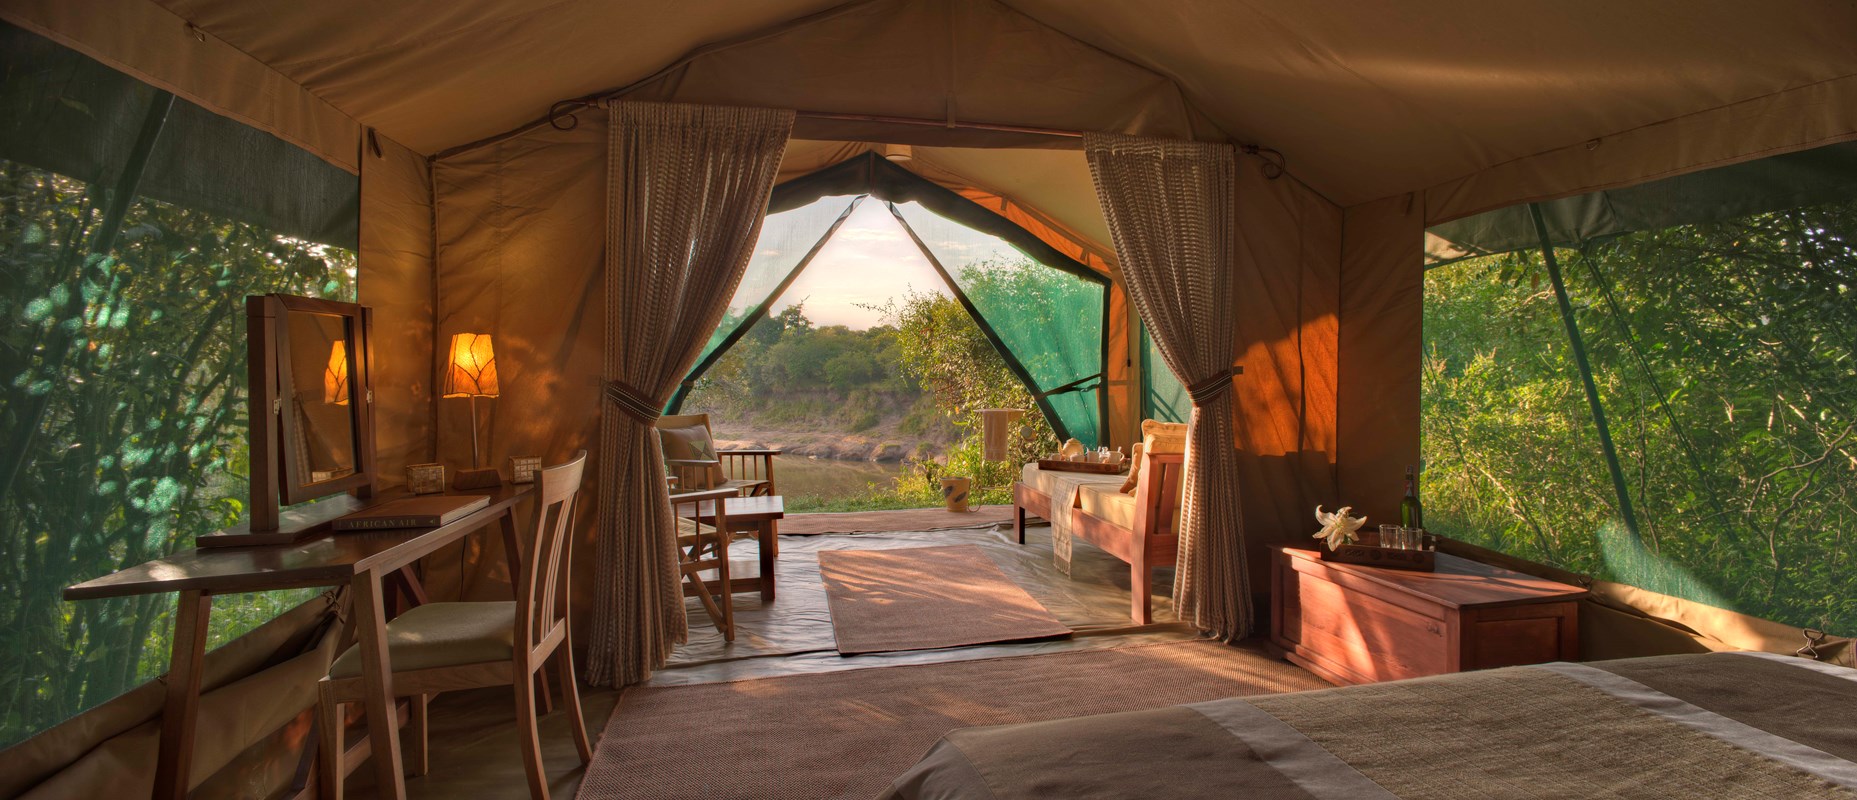 2. Rekero Camp Luxury Guest Tent View